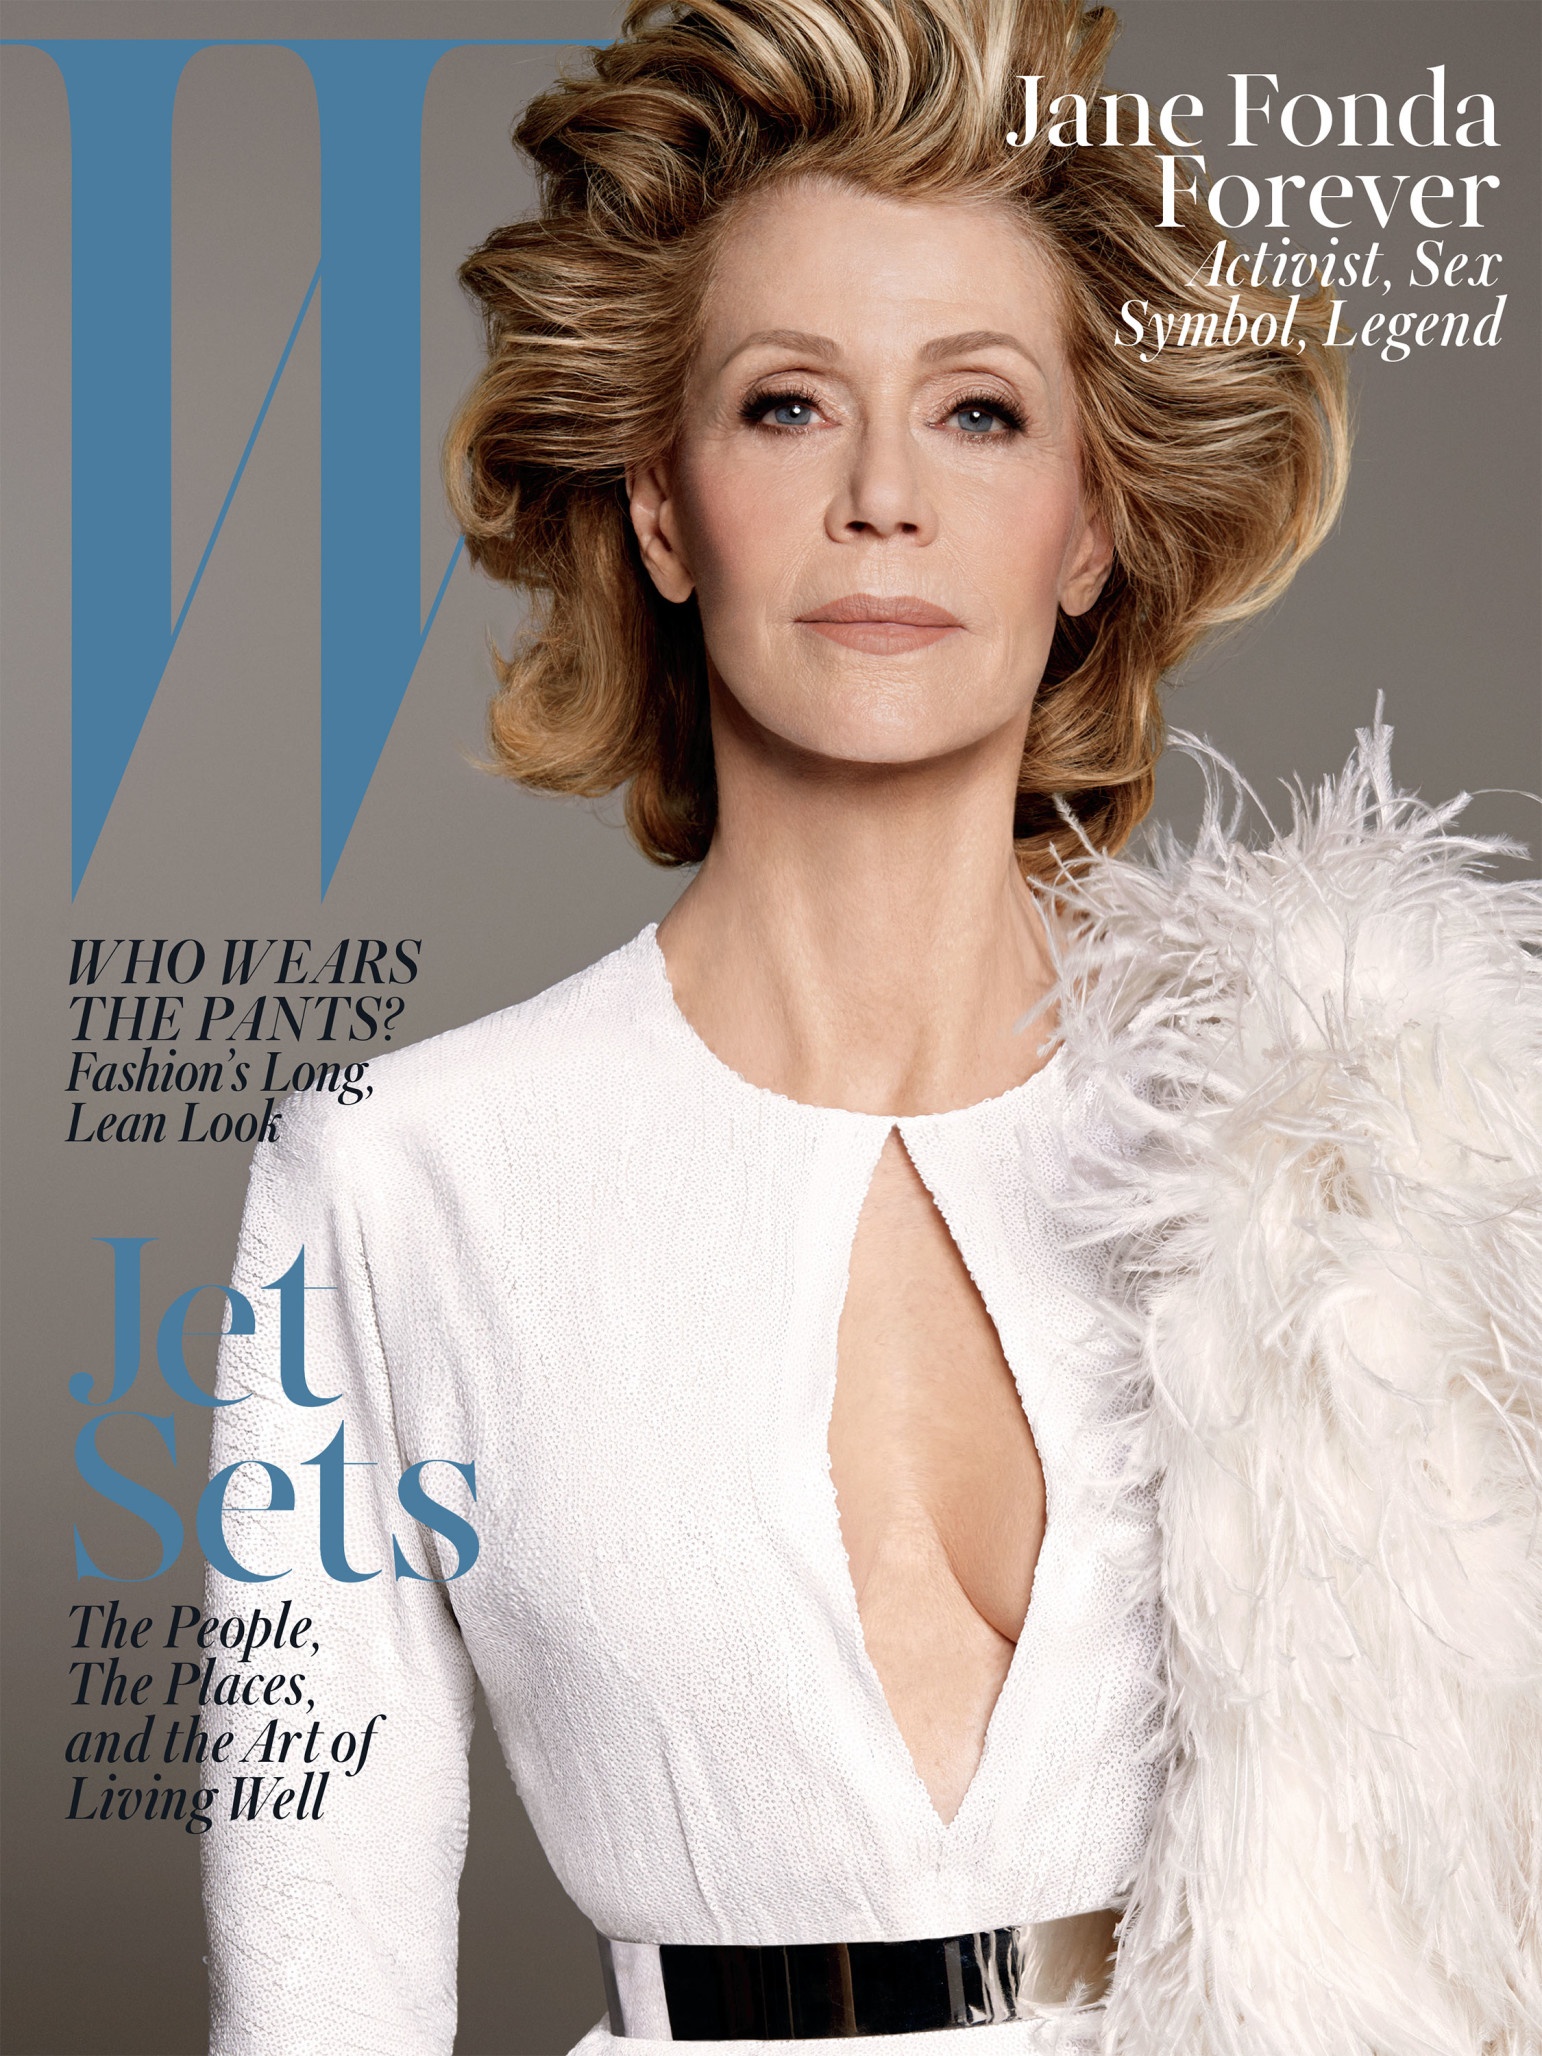 Jane Fonda W magazine cover — That’s Not My Age